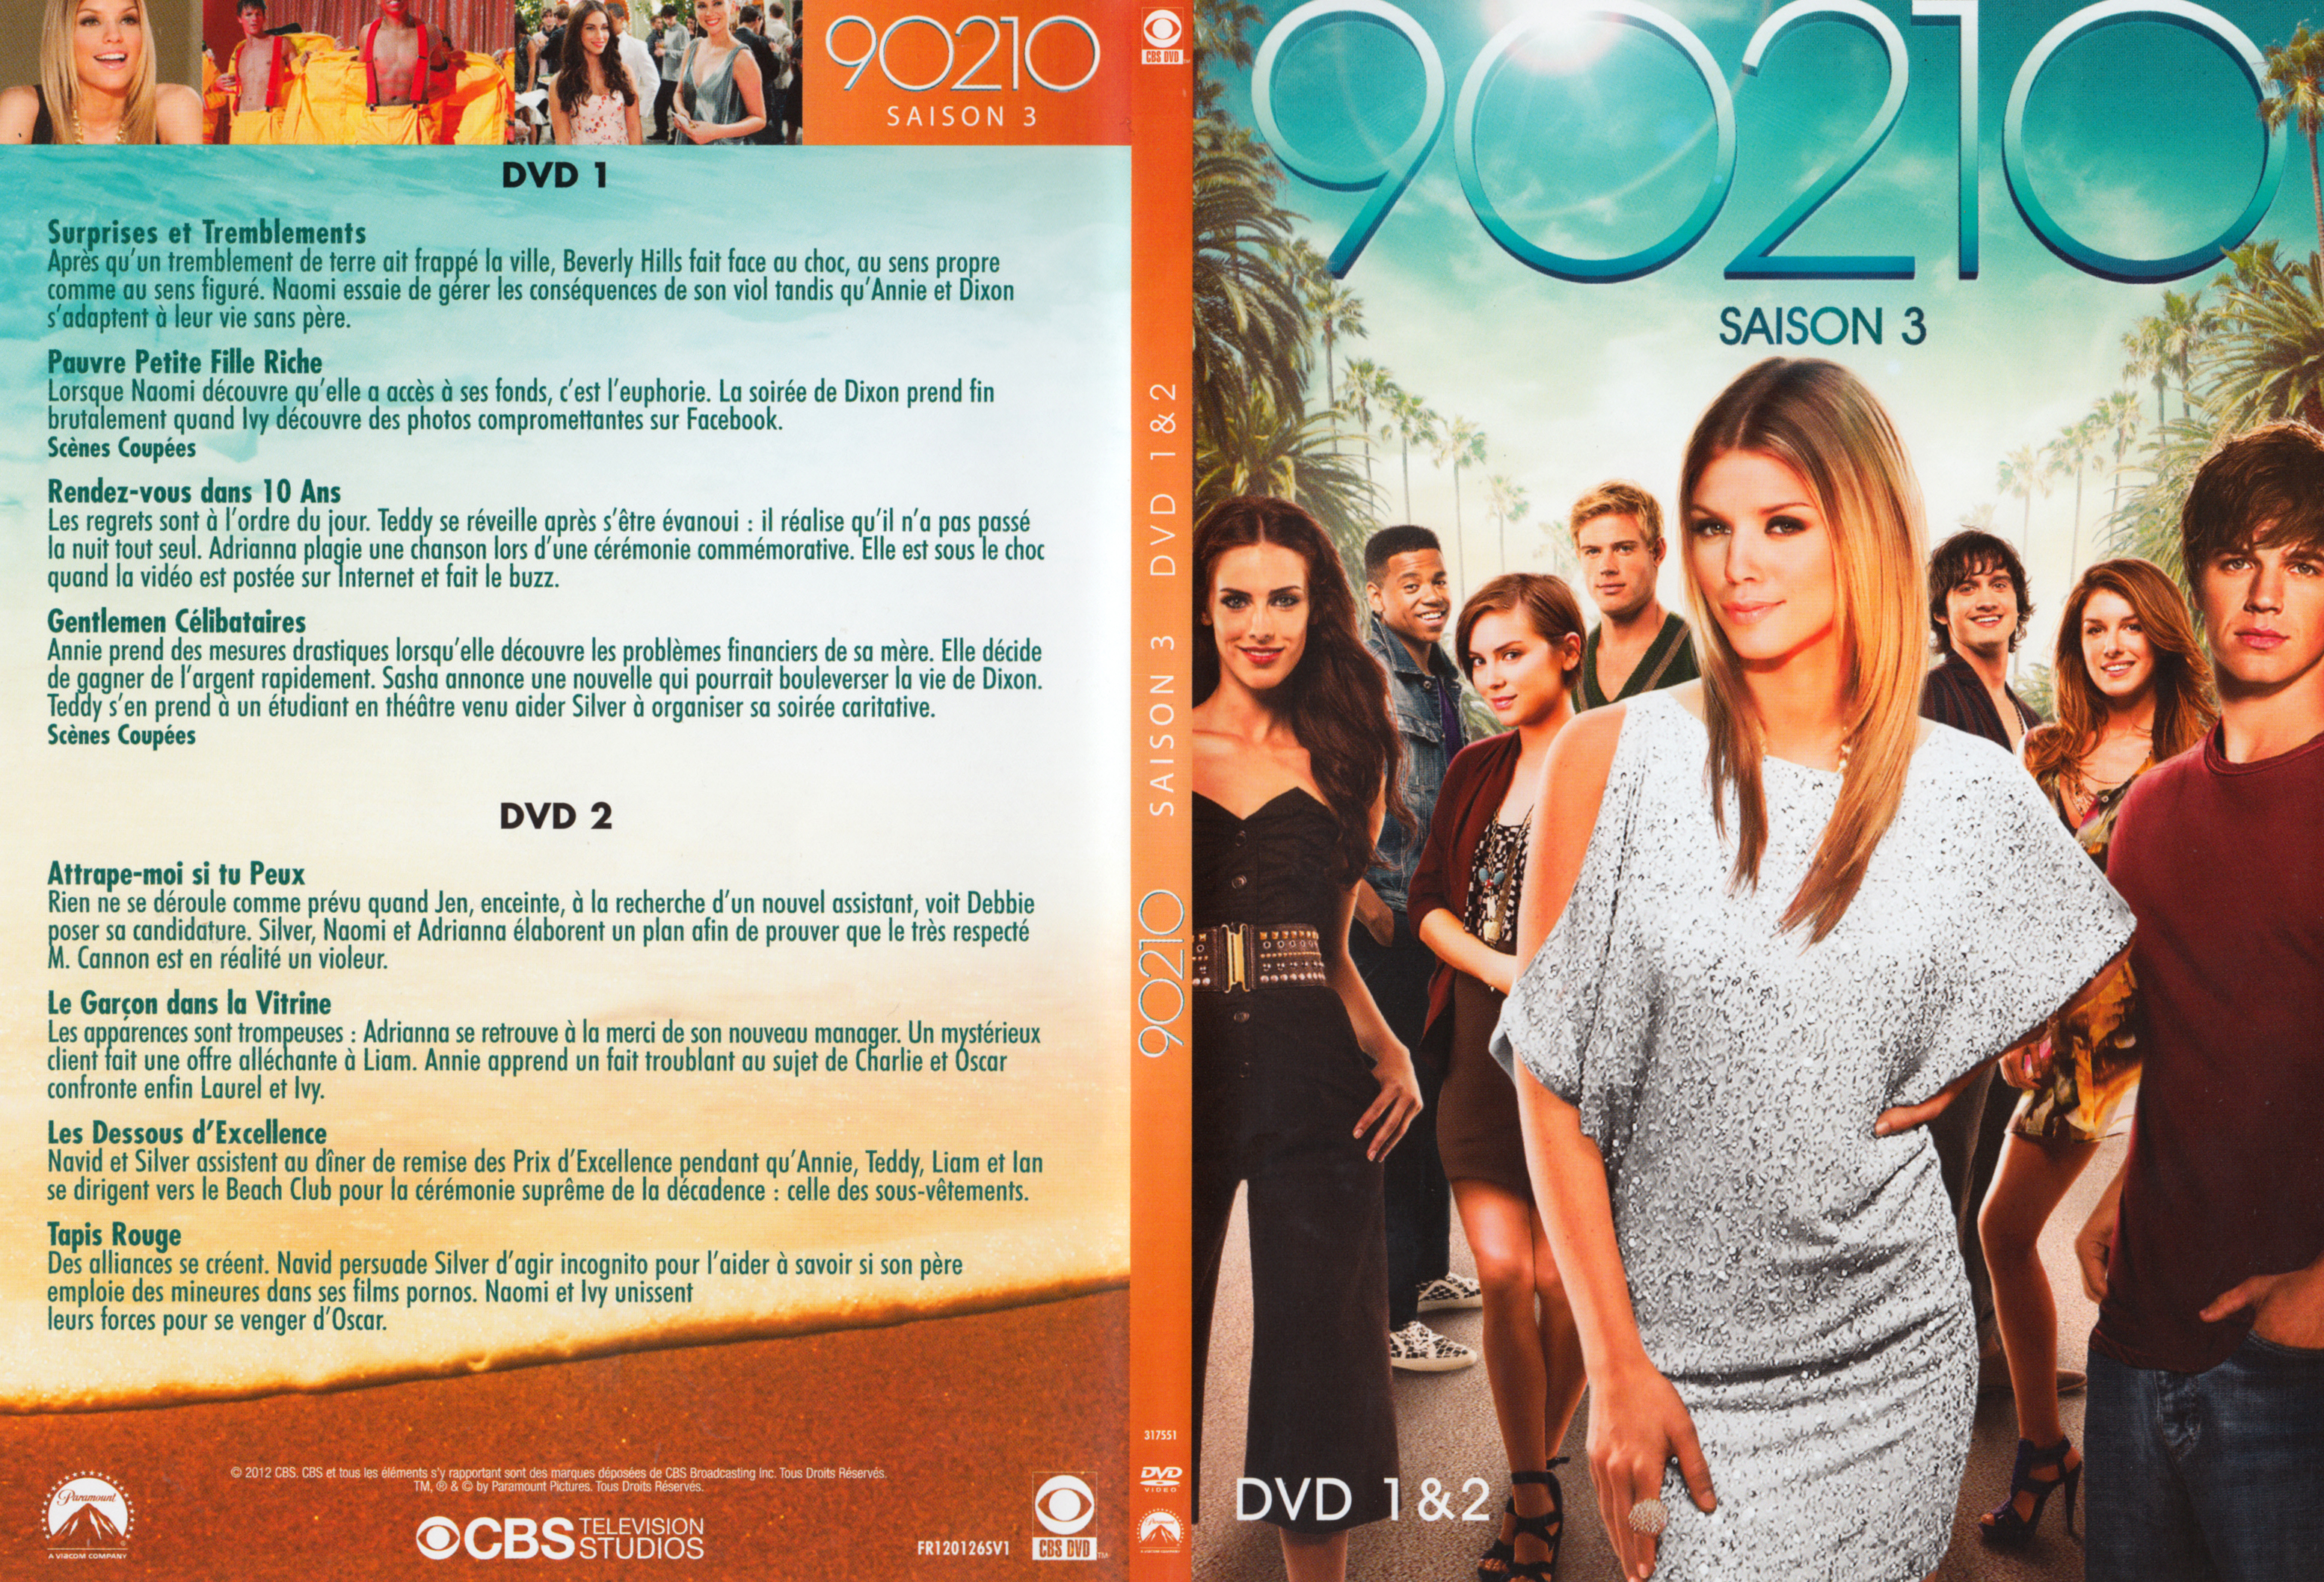 Jaquette DVD 90210 Saison 3 DVD 1